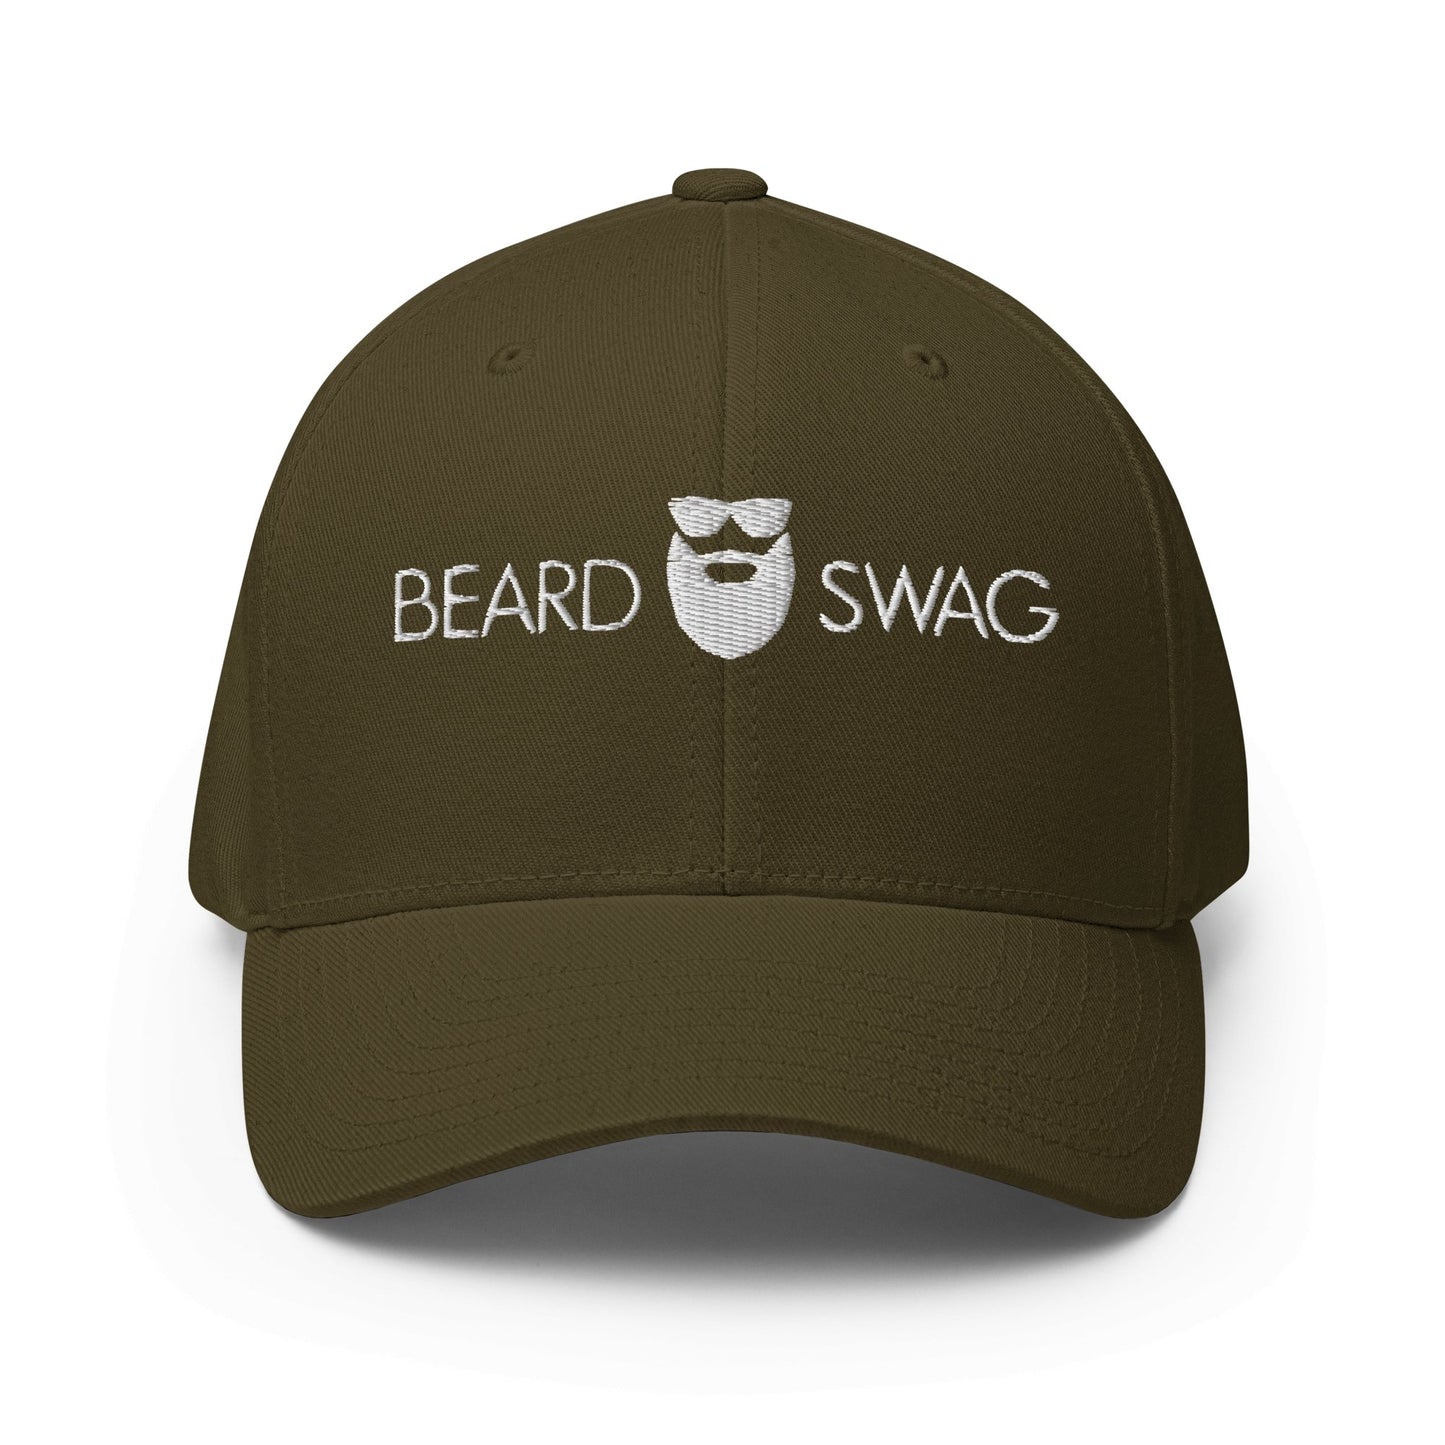 Beard Swag Twill Cap - Beard Swag